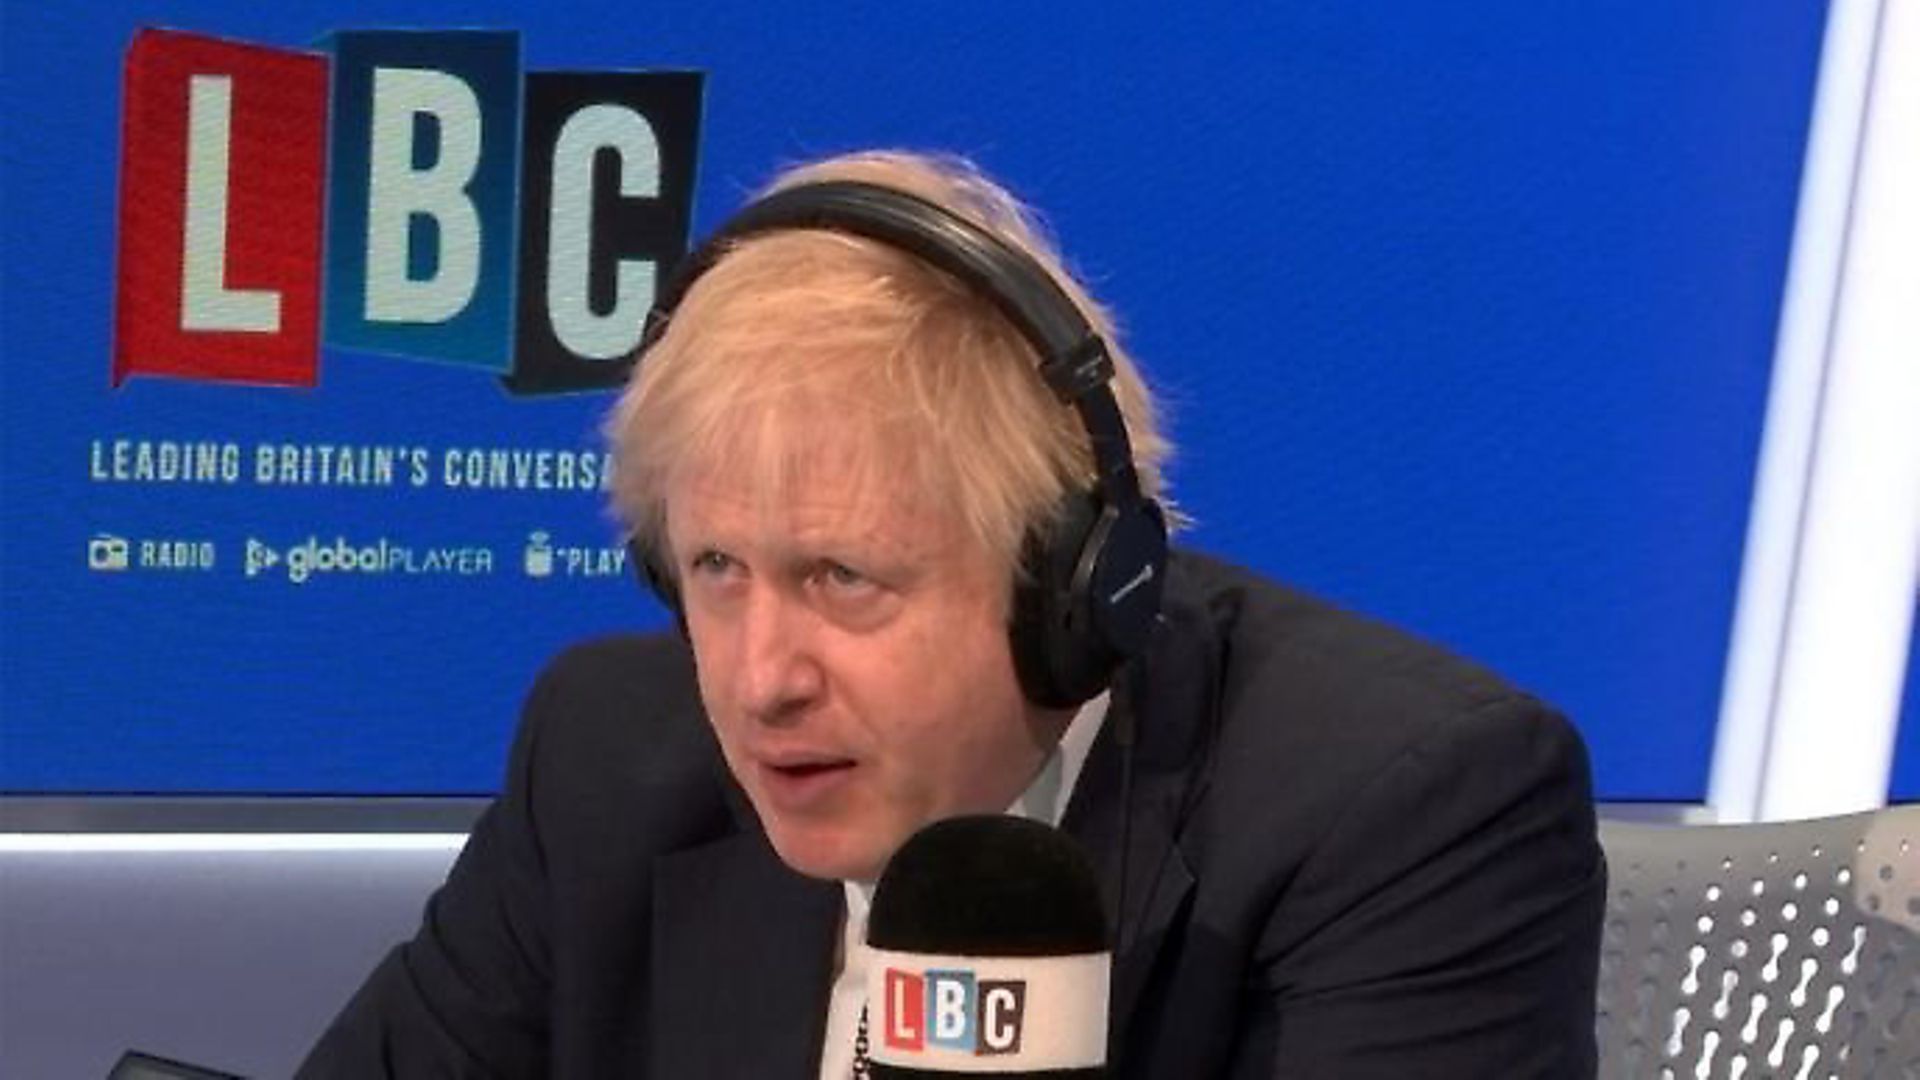 Boris Johnson appears on LBC Radio. Photograph: LBC/Global. - Credit: Archant